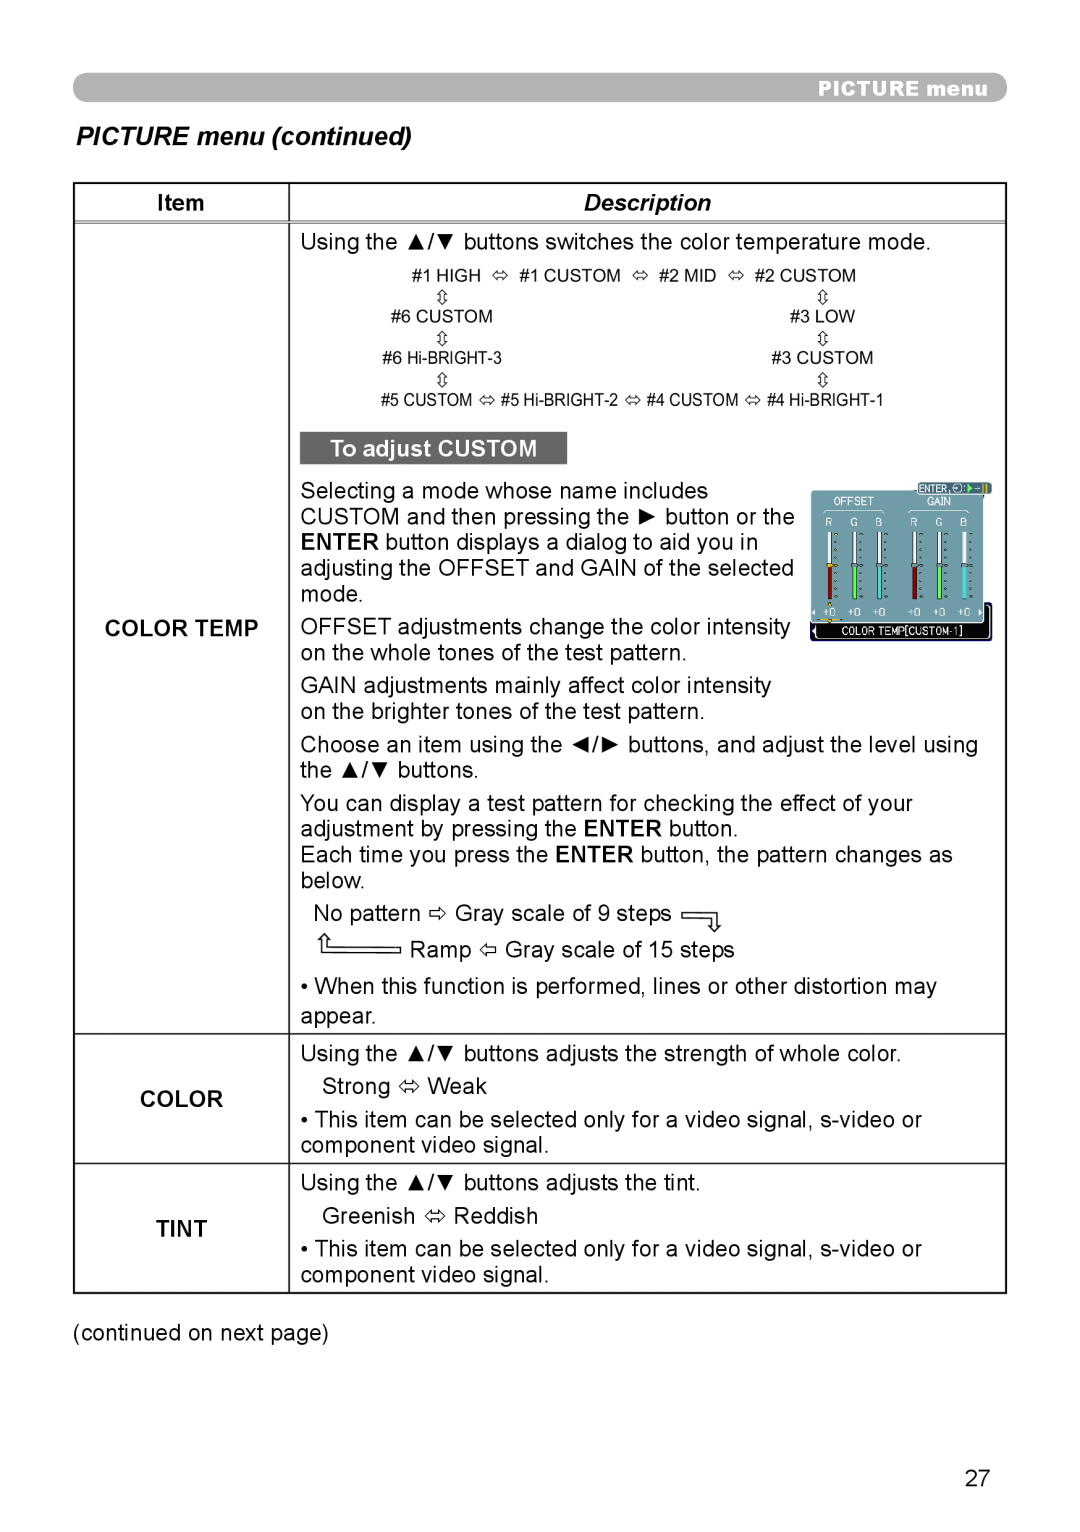 Hitachi CP-X306, CP-X206 user manual PICTURE menu continued, Description, To adjust CUSTOM, Color, Tint 